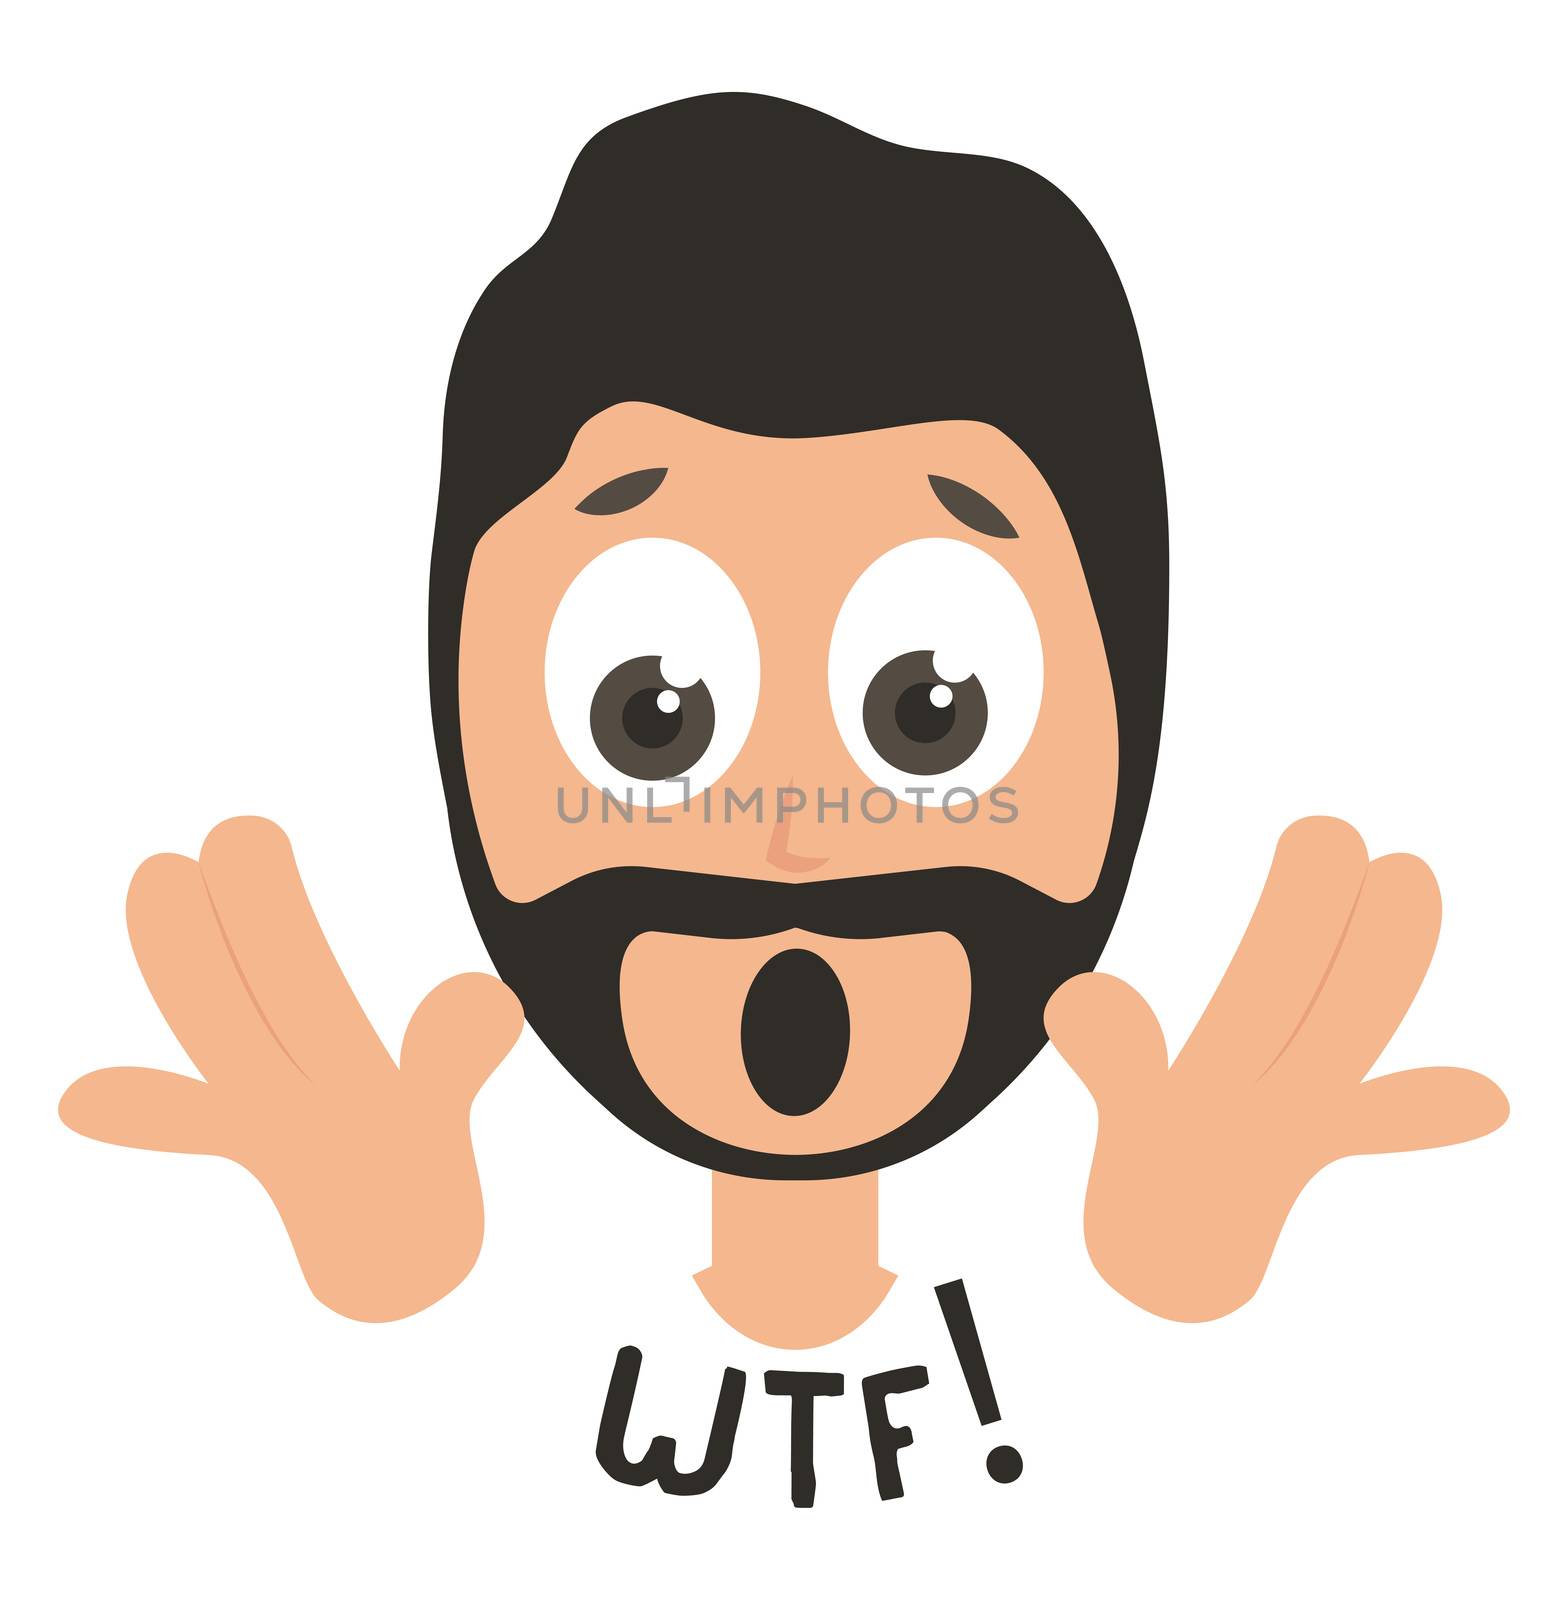 Shocked man emoji, illustration, vector on white background by Morphart